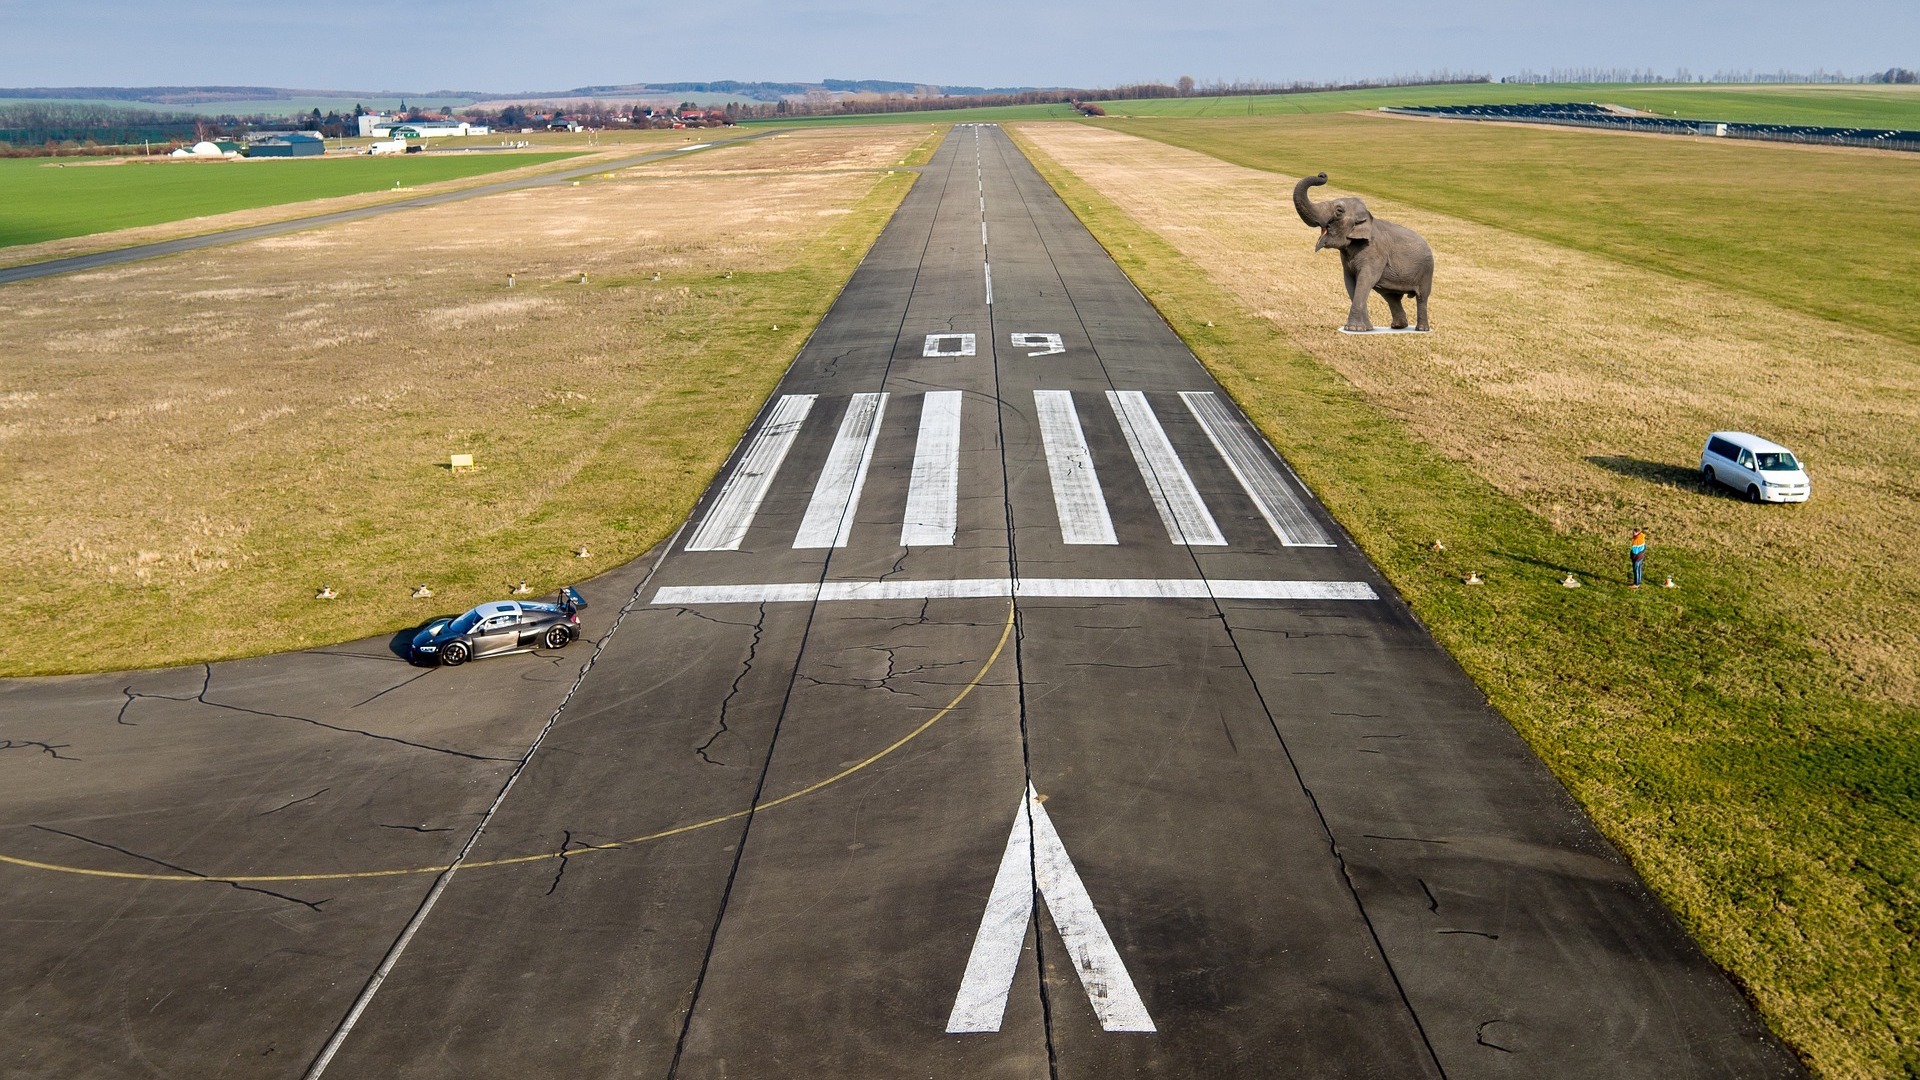 An elephant standing next to a runway 